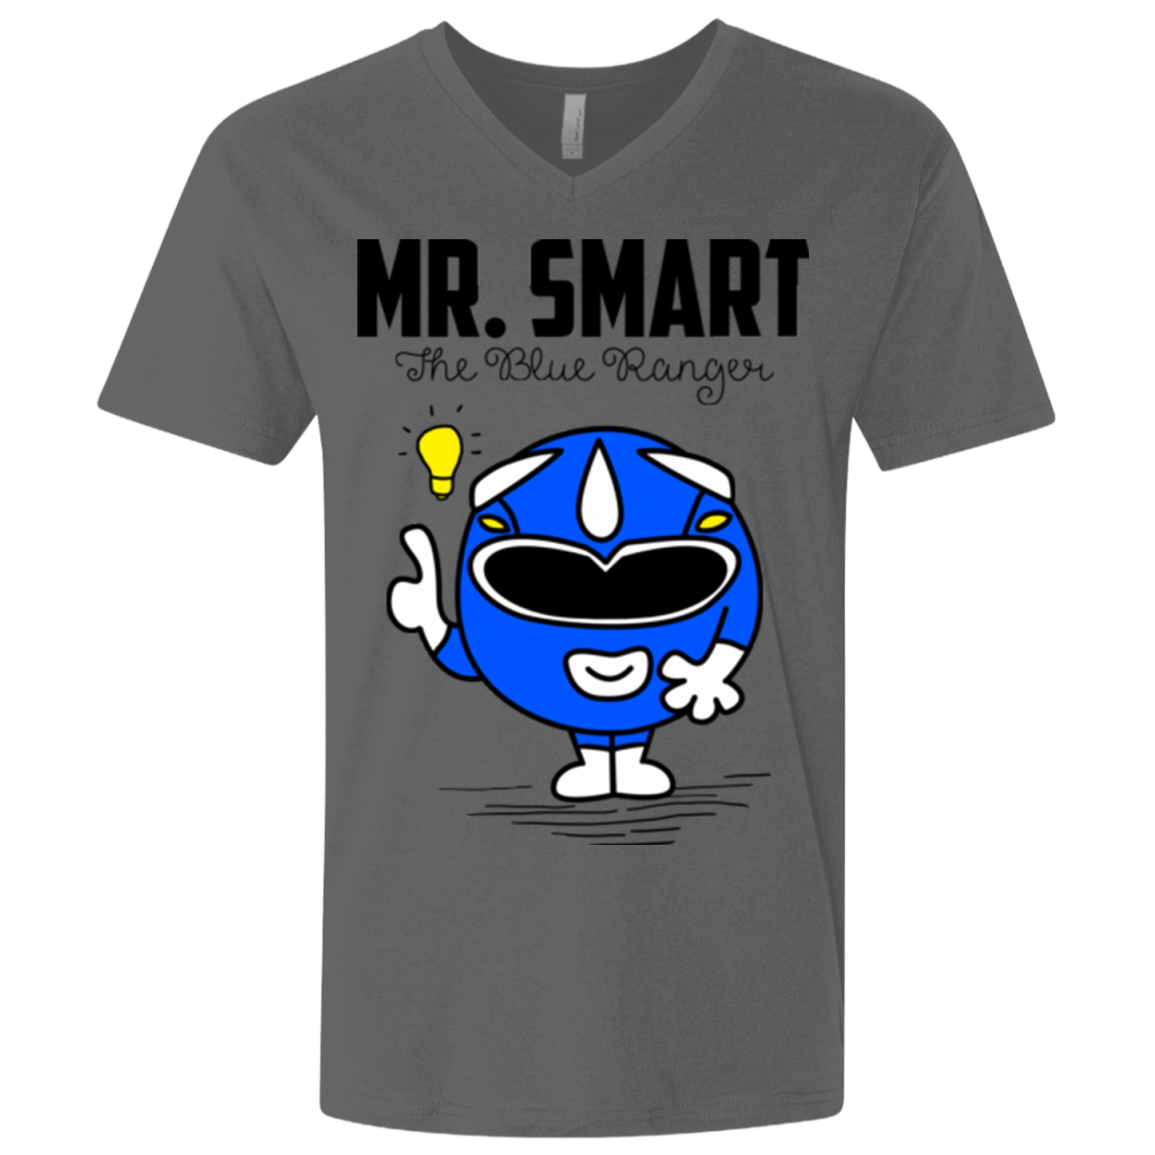 T-Shirts Heavy Metal / X-Small Mr Smart Men's Premium V-Neck